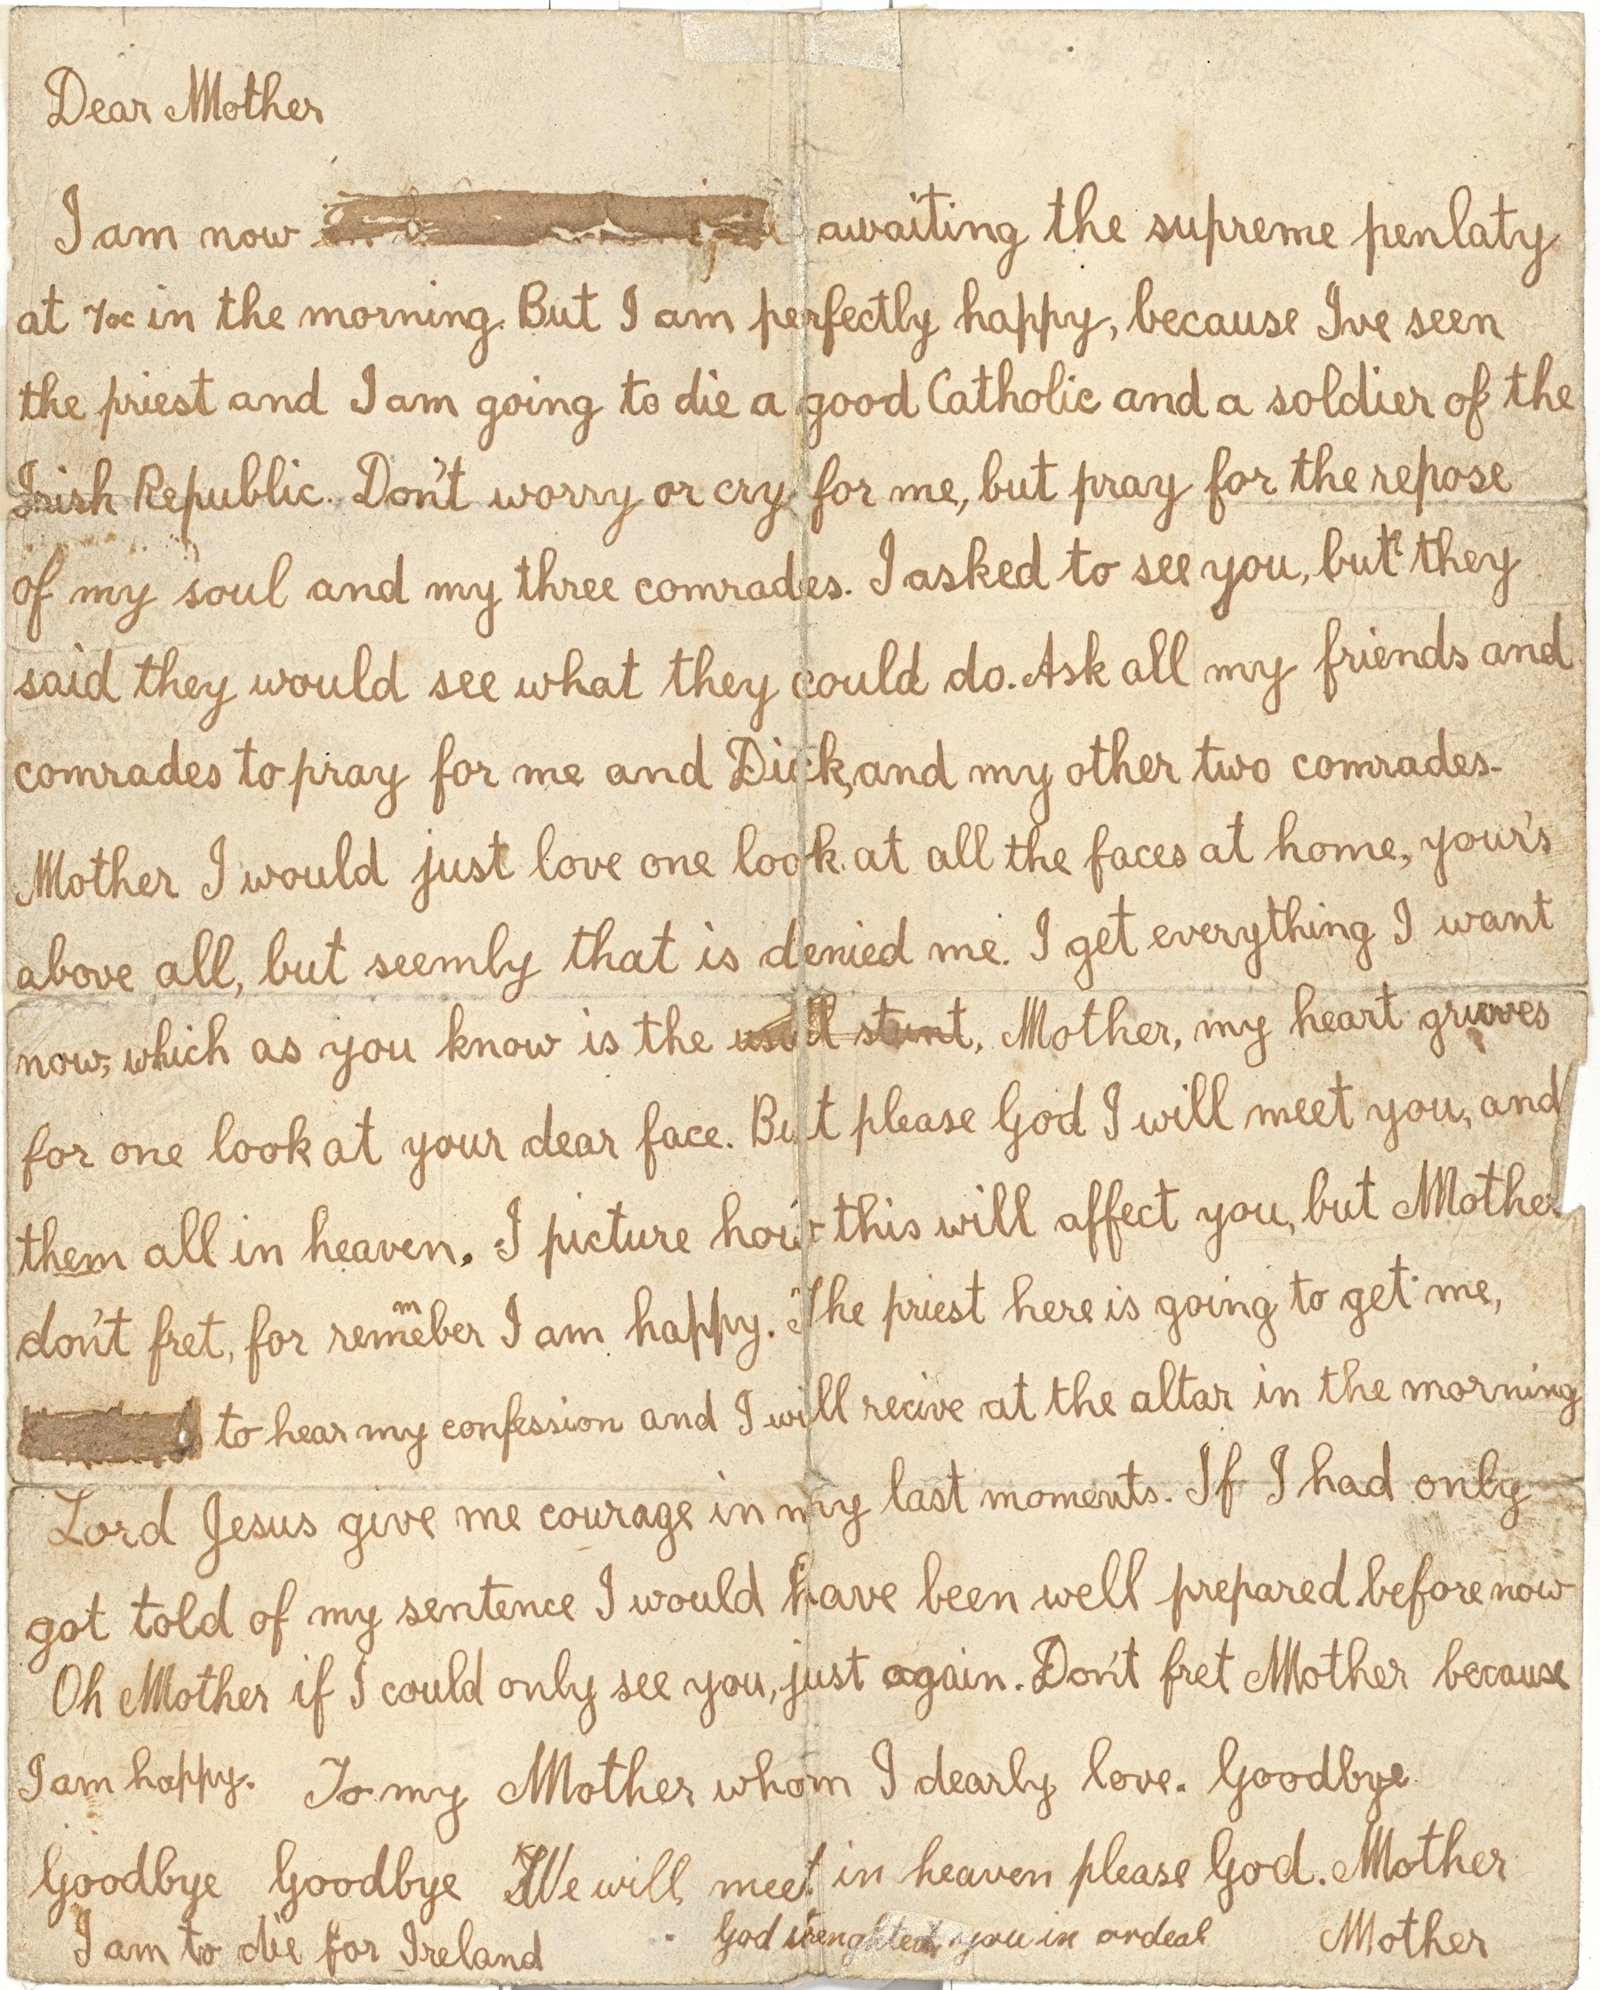 Image - James Fisher's final letter. Credit: Kilmainham Gaol Archive.